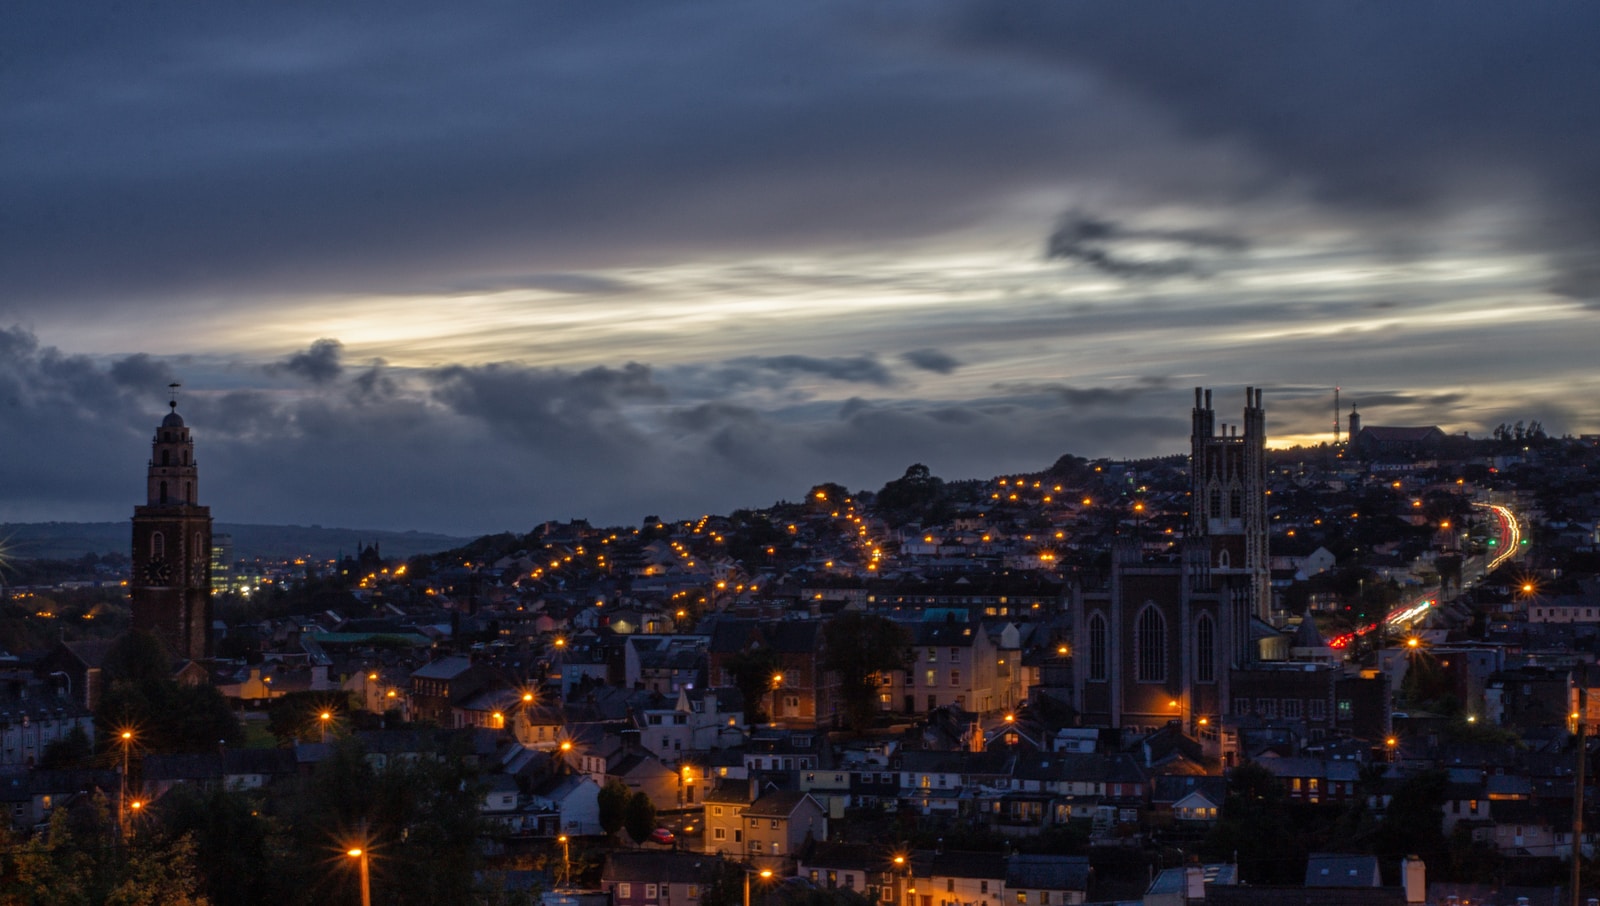 Cork city skyline during night time